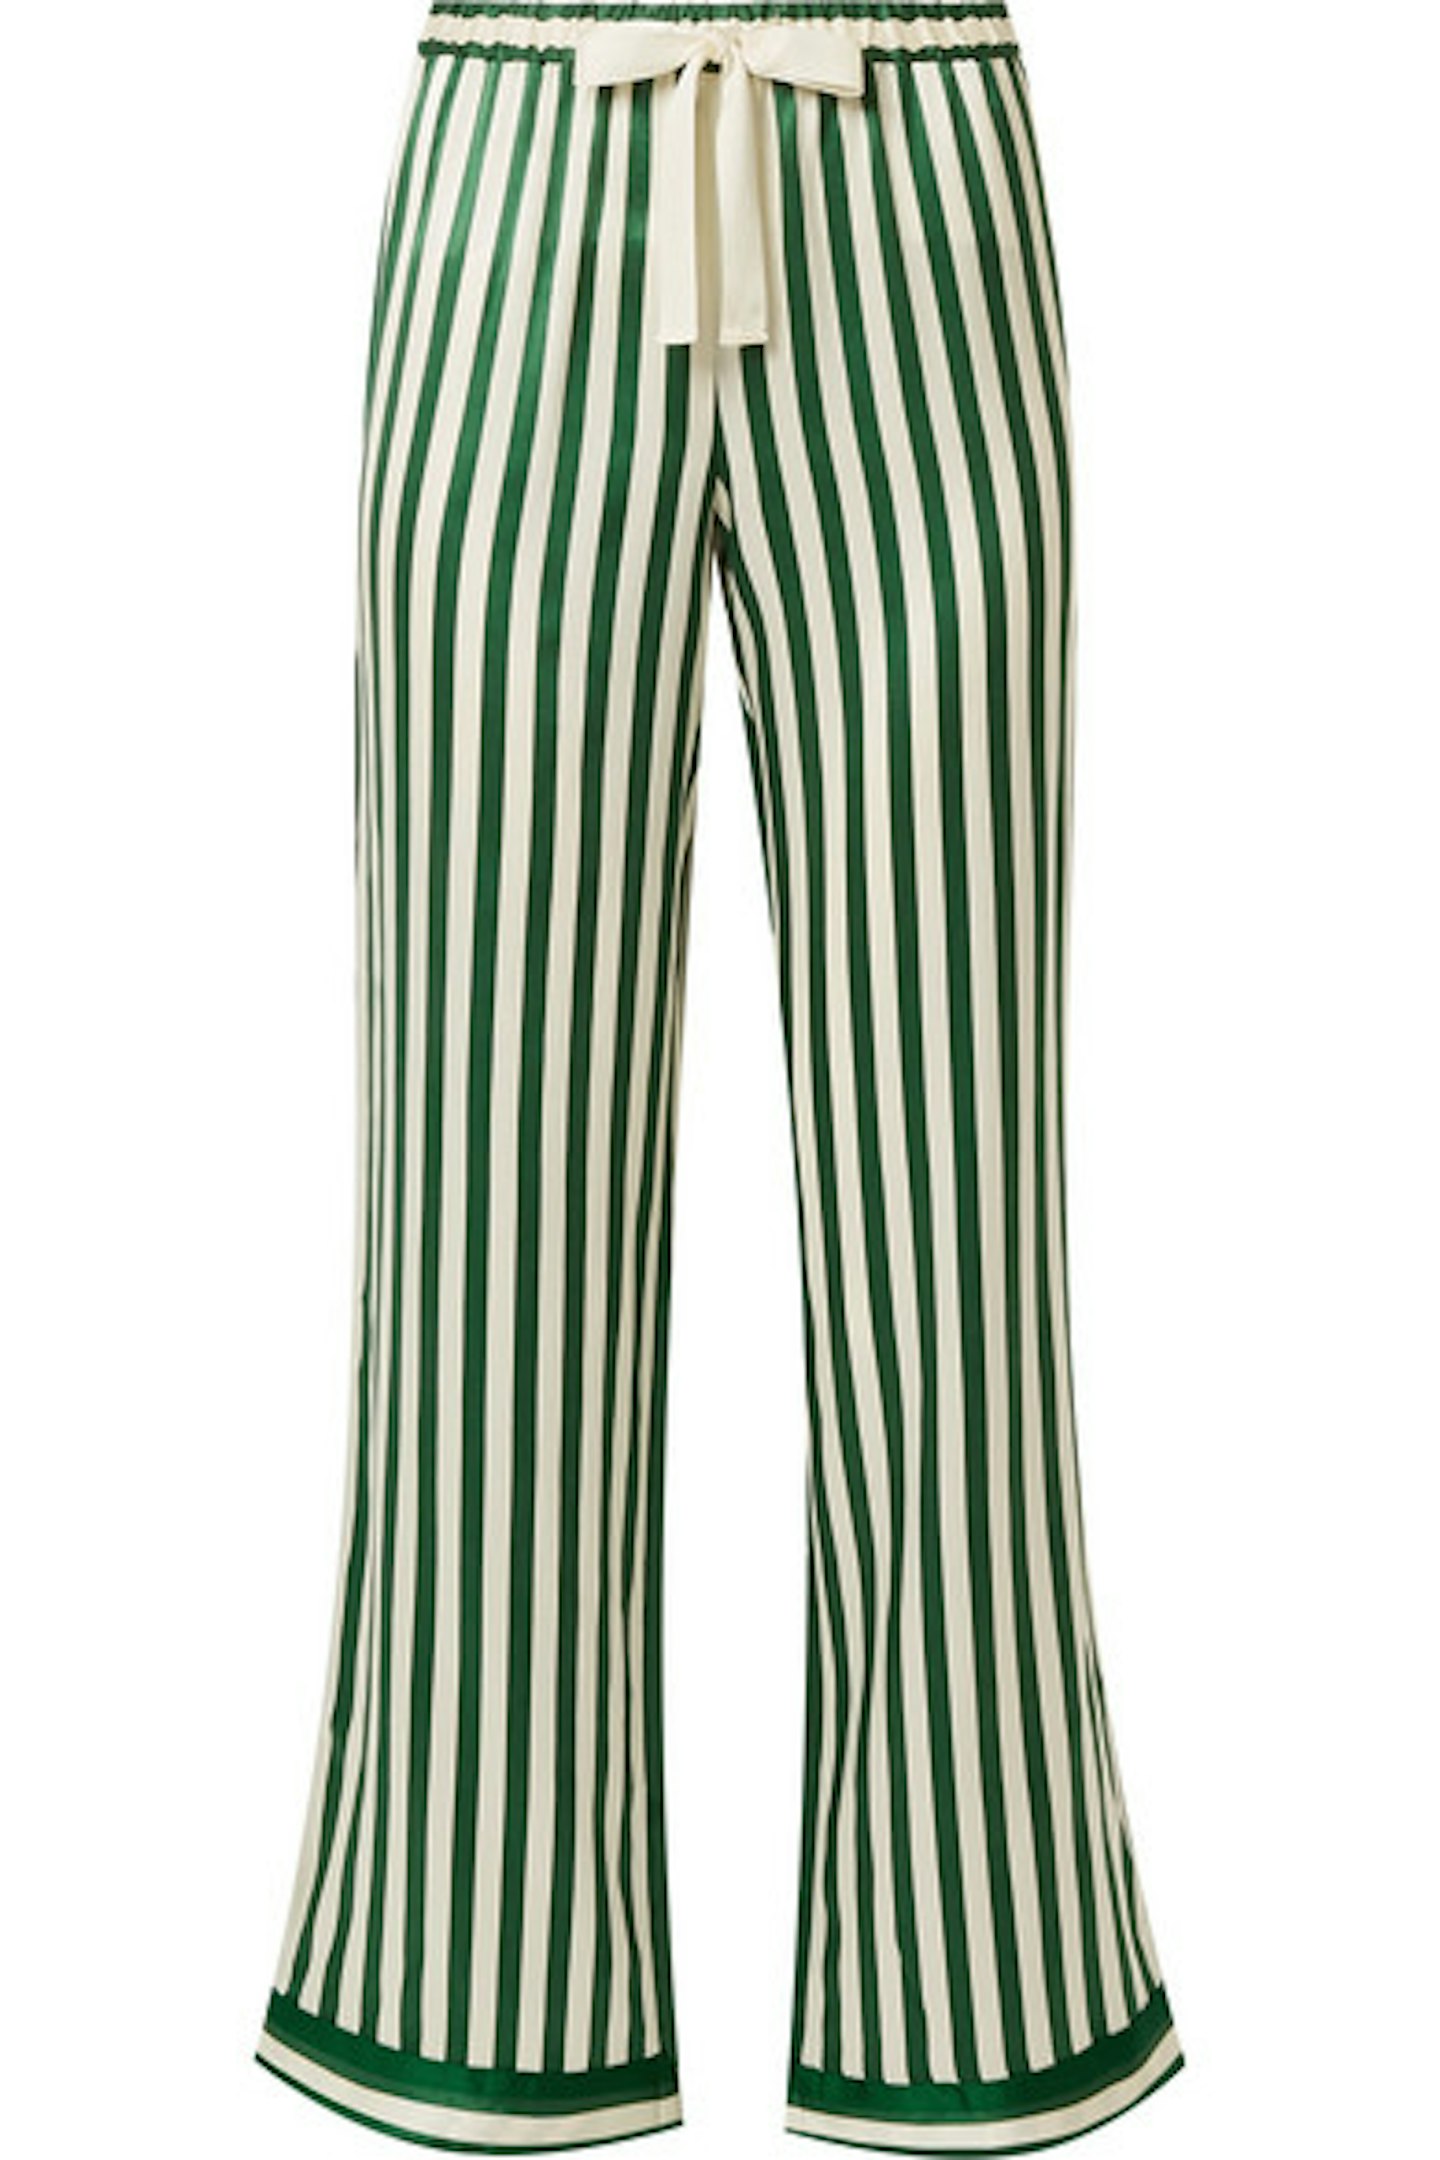 Morgan Lane, Striped Silk-Charmeuse Pyjama Trousers, £255